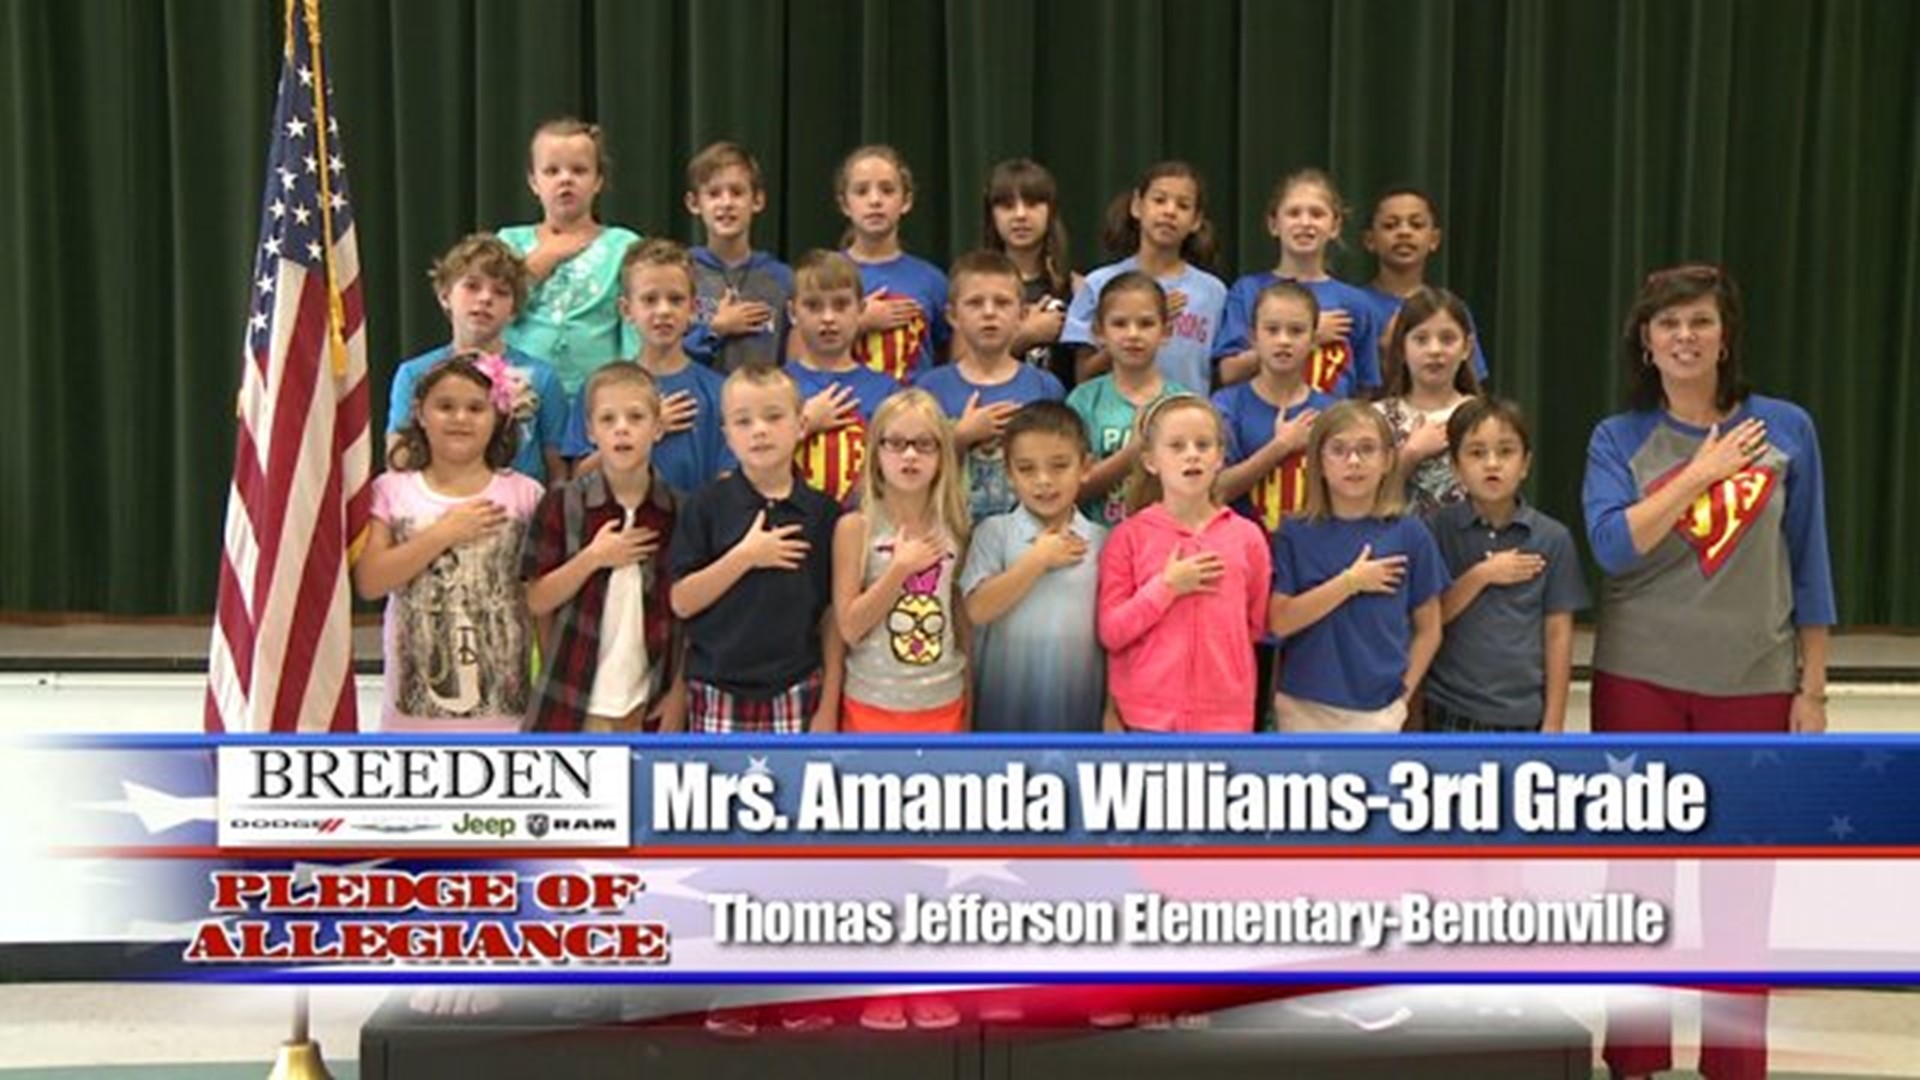 Thomas Jefferson Elementary, Bentonville - Mrs. Amanda Williams - 3rd Grade